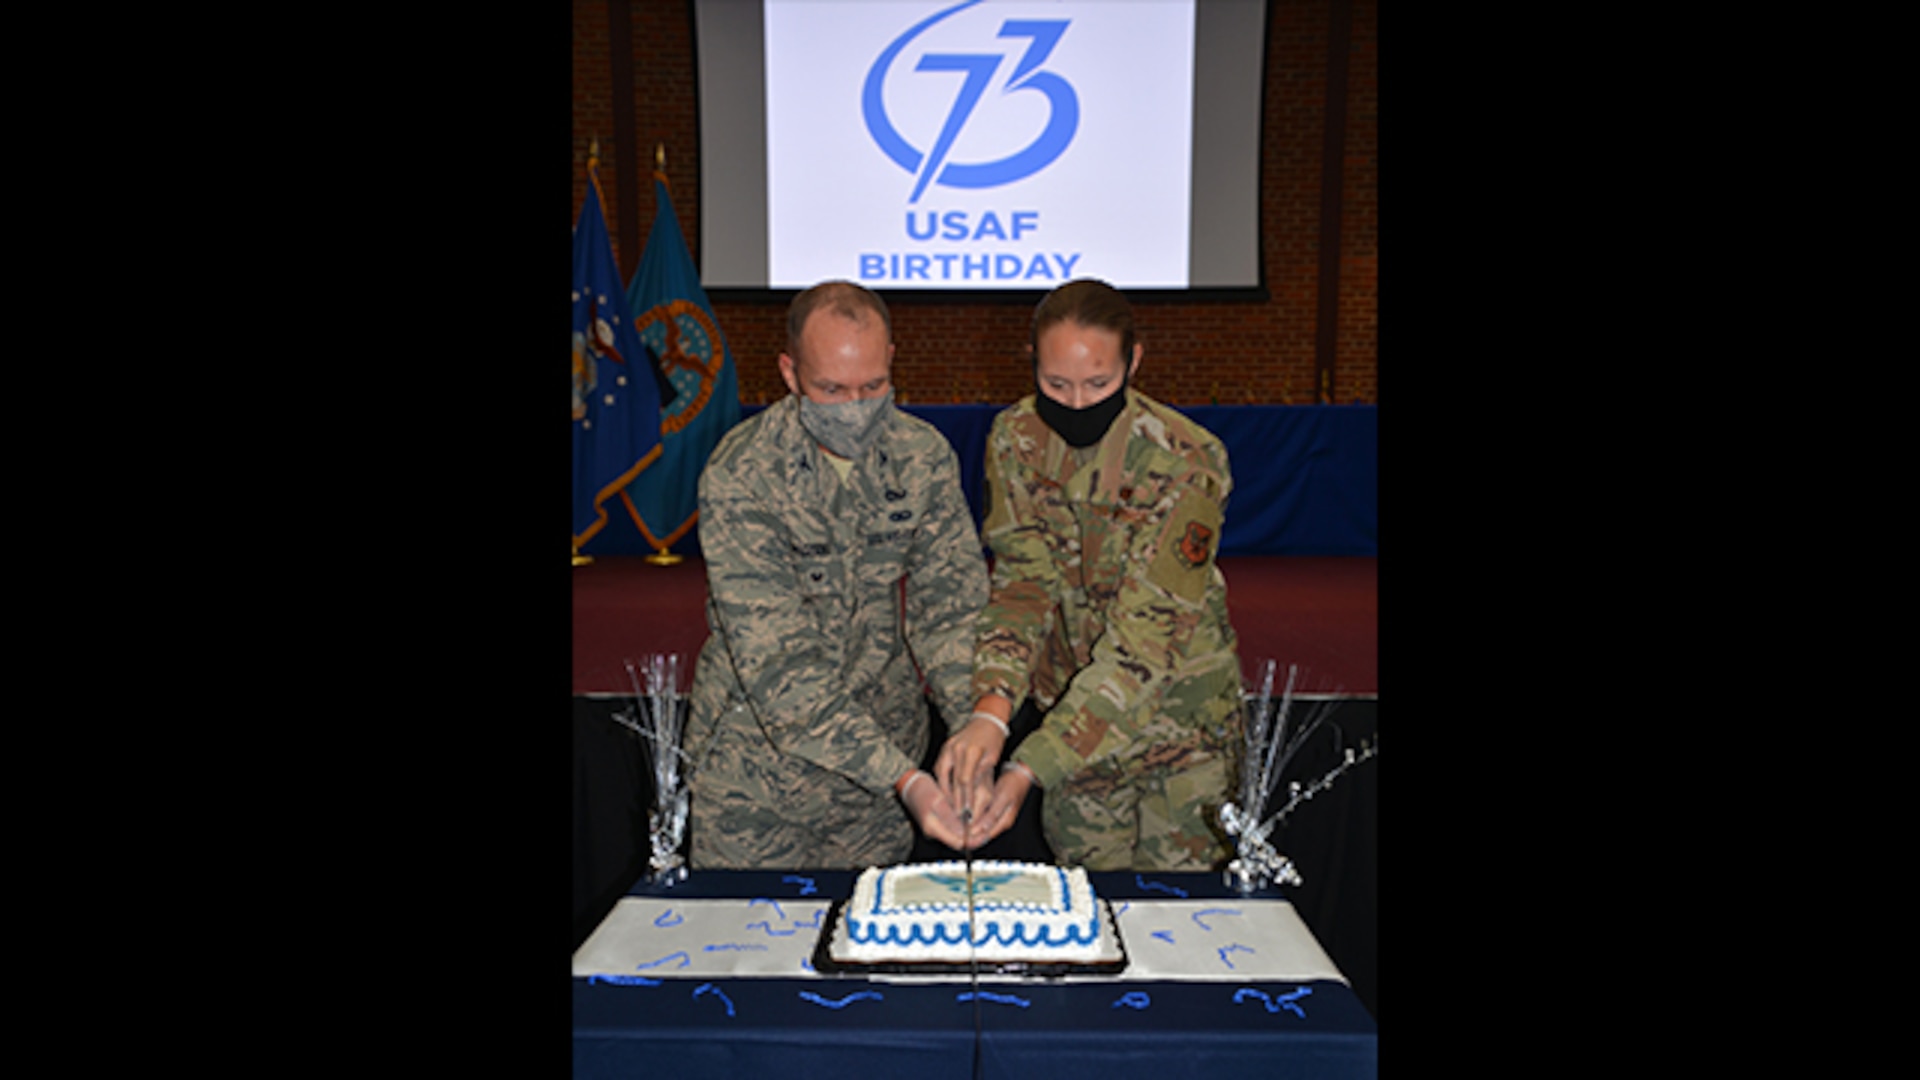 Airmen cut birthday cake